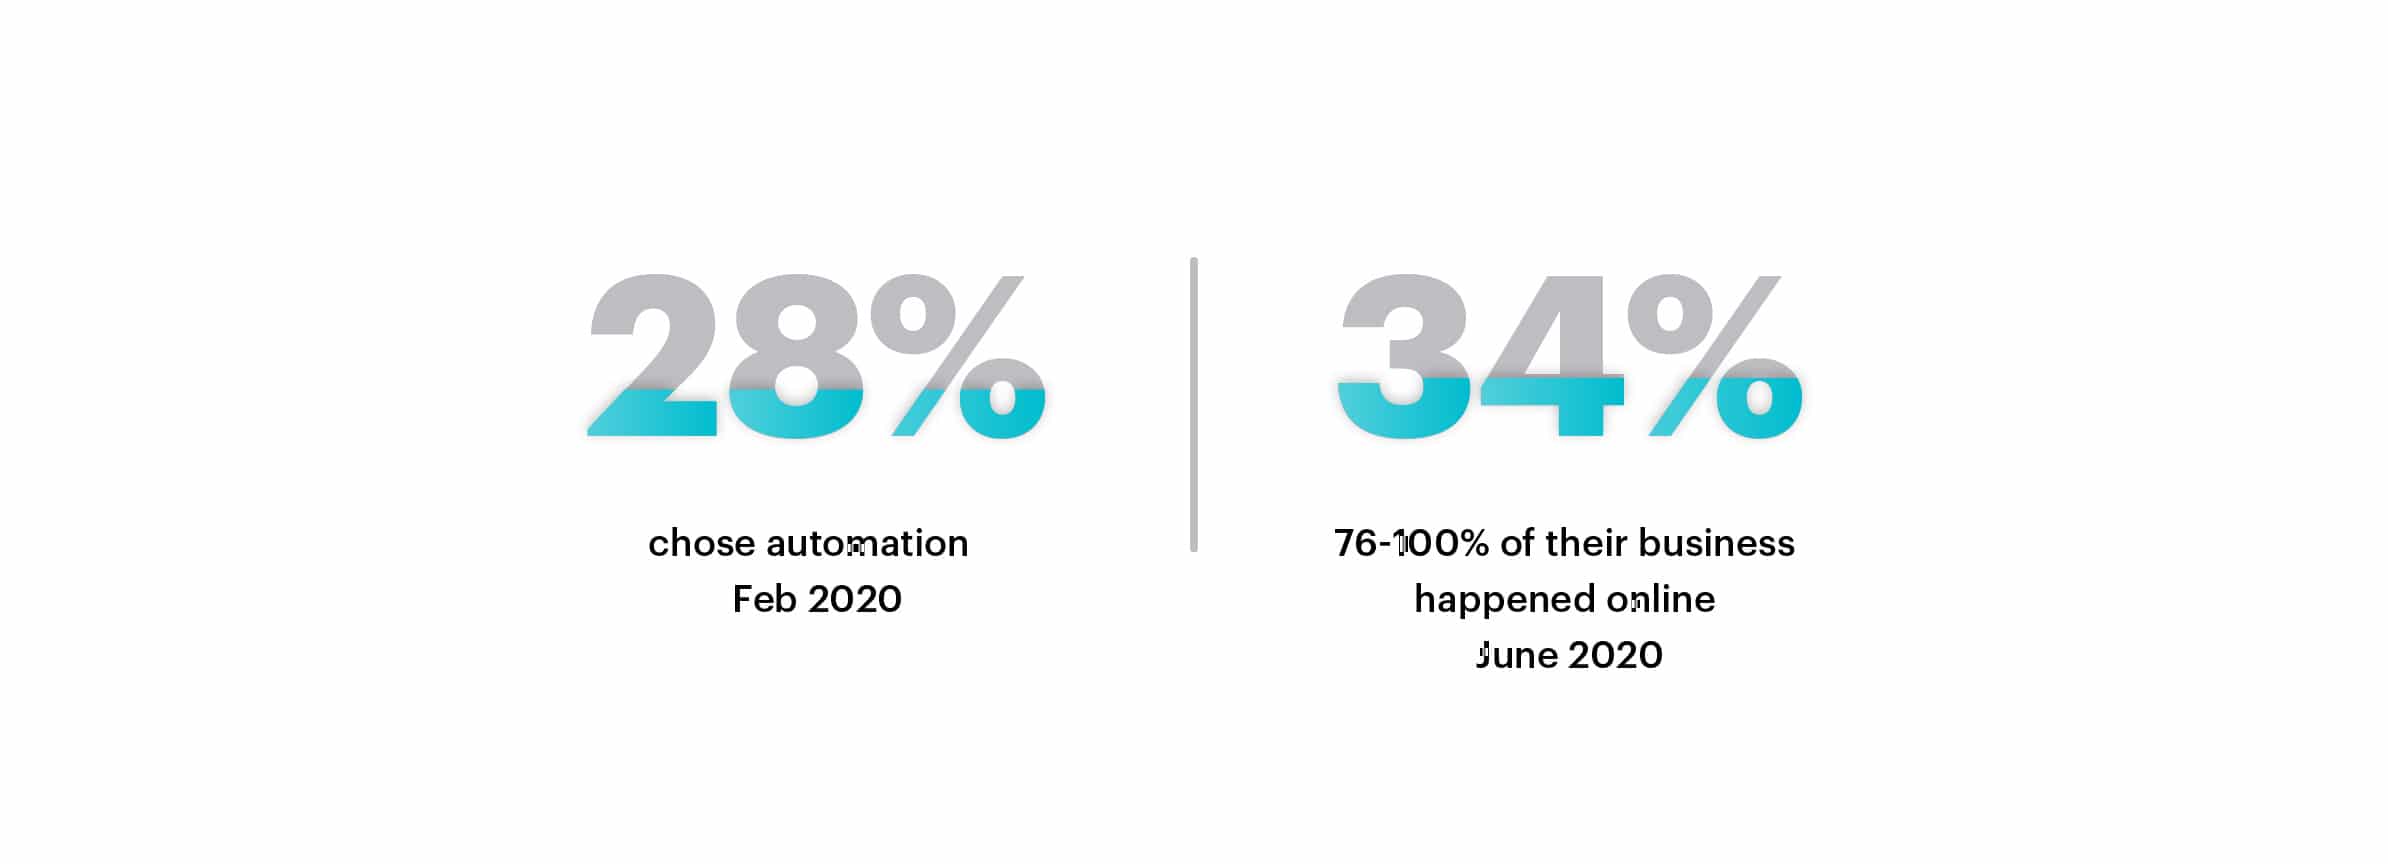 34% choose automation June 2020  28% chose automation Feb 2020